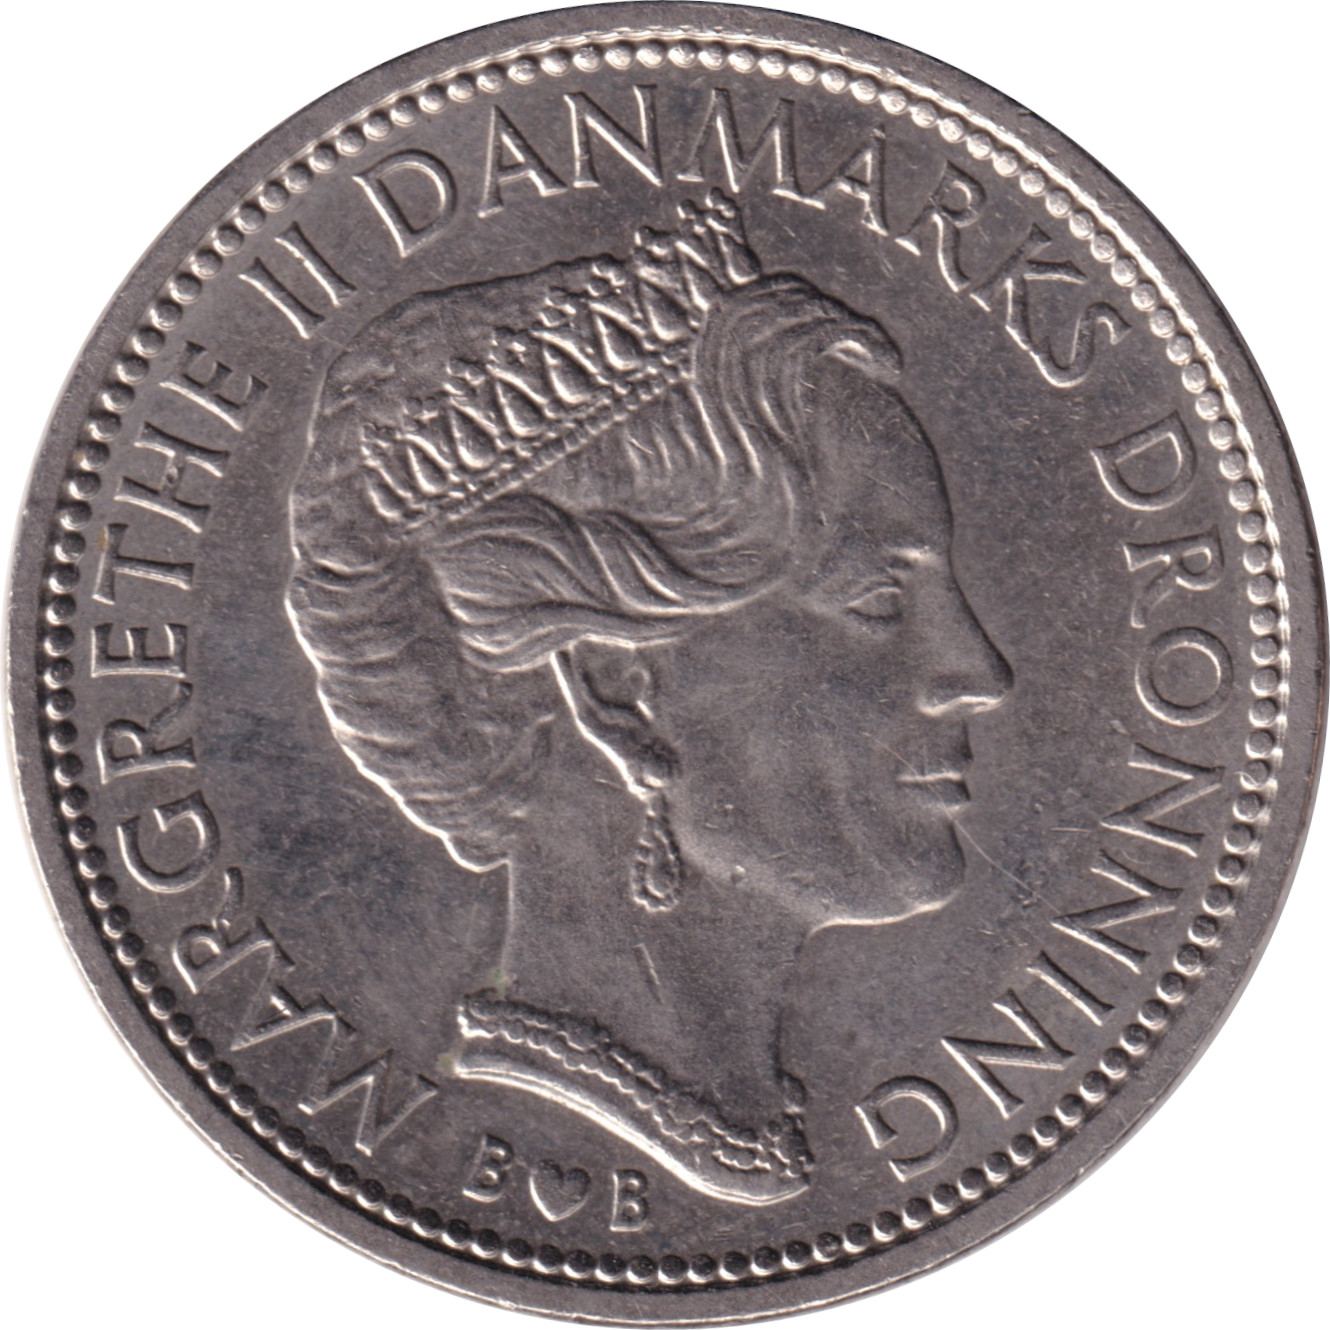 10 kroner - Margrethe II - Epis